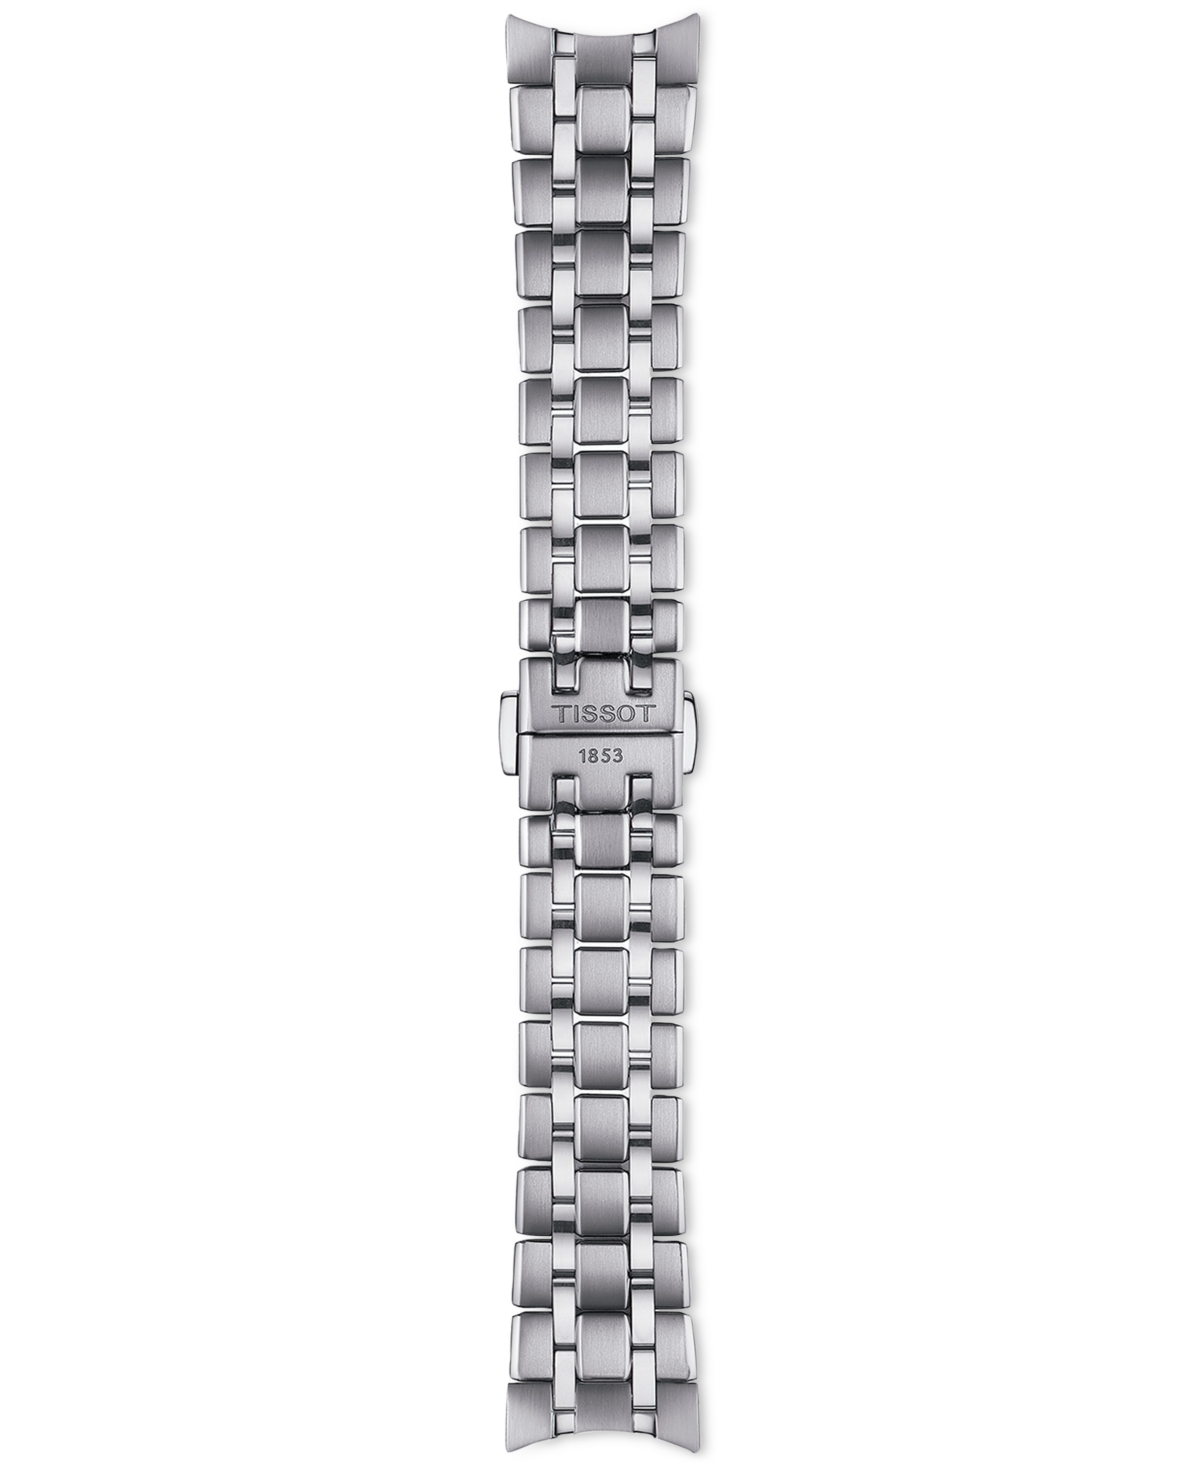 Shop Tissot Women's Swiss Automatic Chemin Des Tourelles Powermatic 80 Stainless Steel Bracelet Watch 34mm In No Color